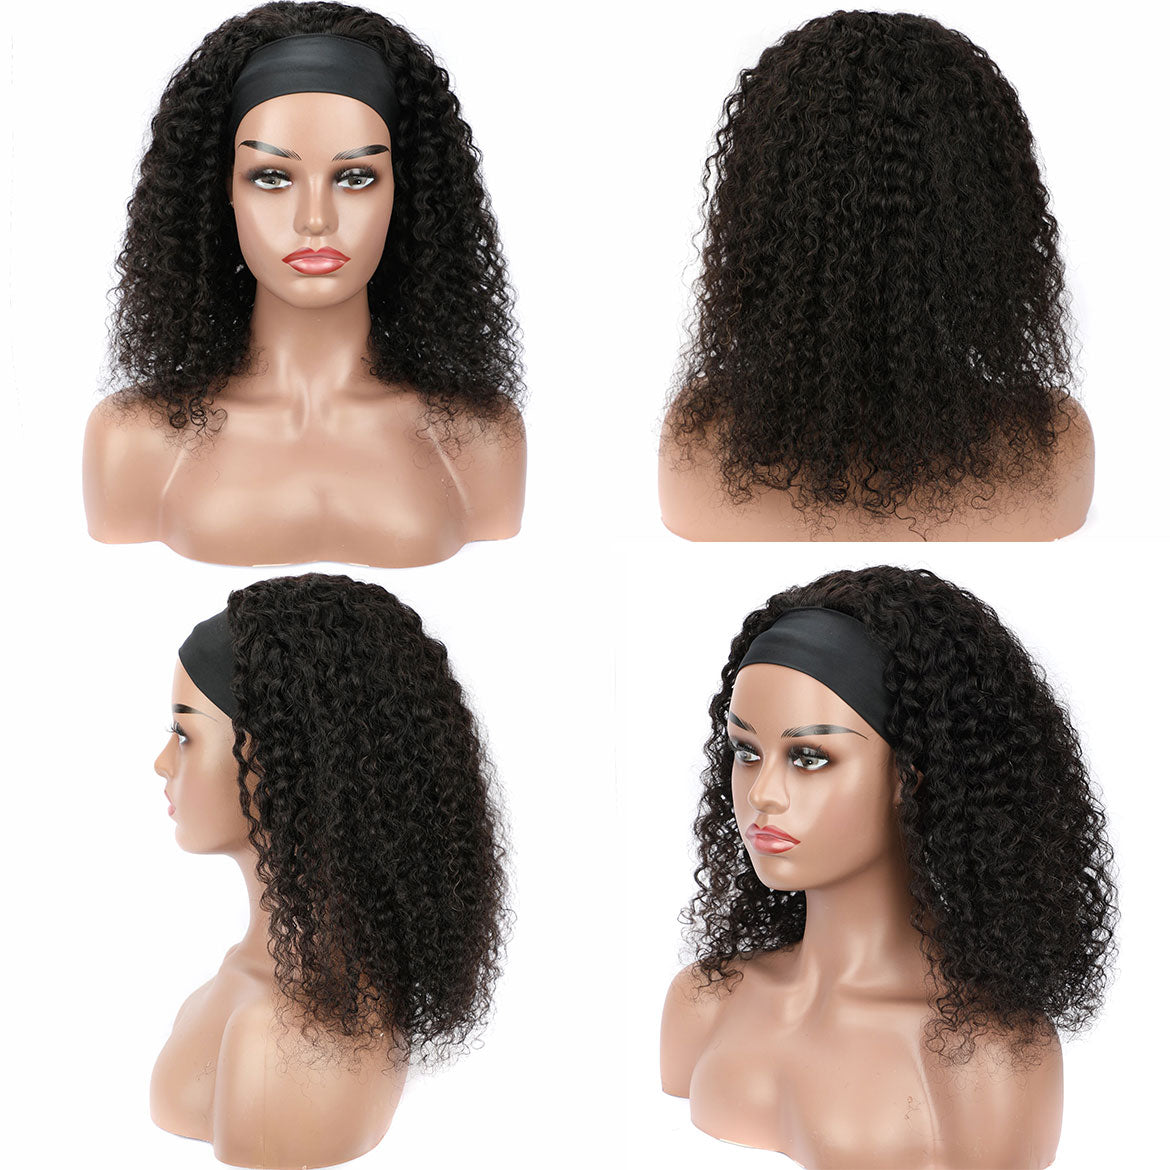 Curly Headband Wigs Human Hair